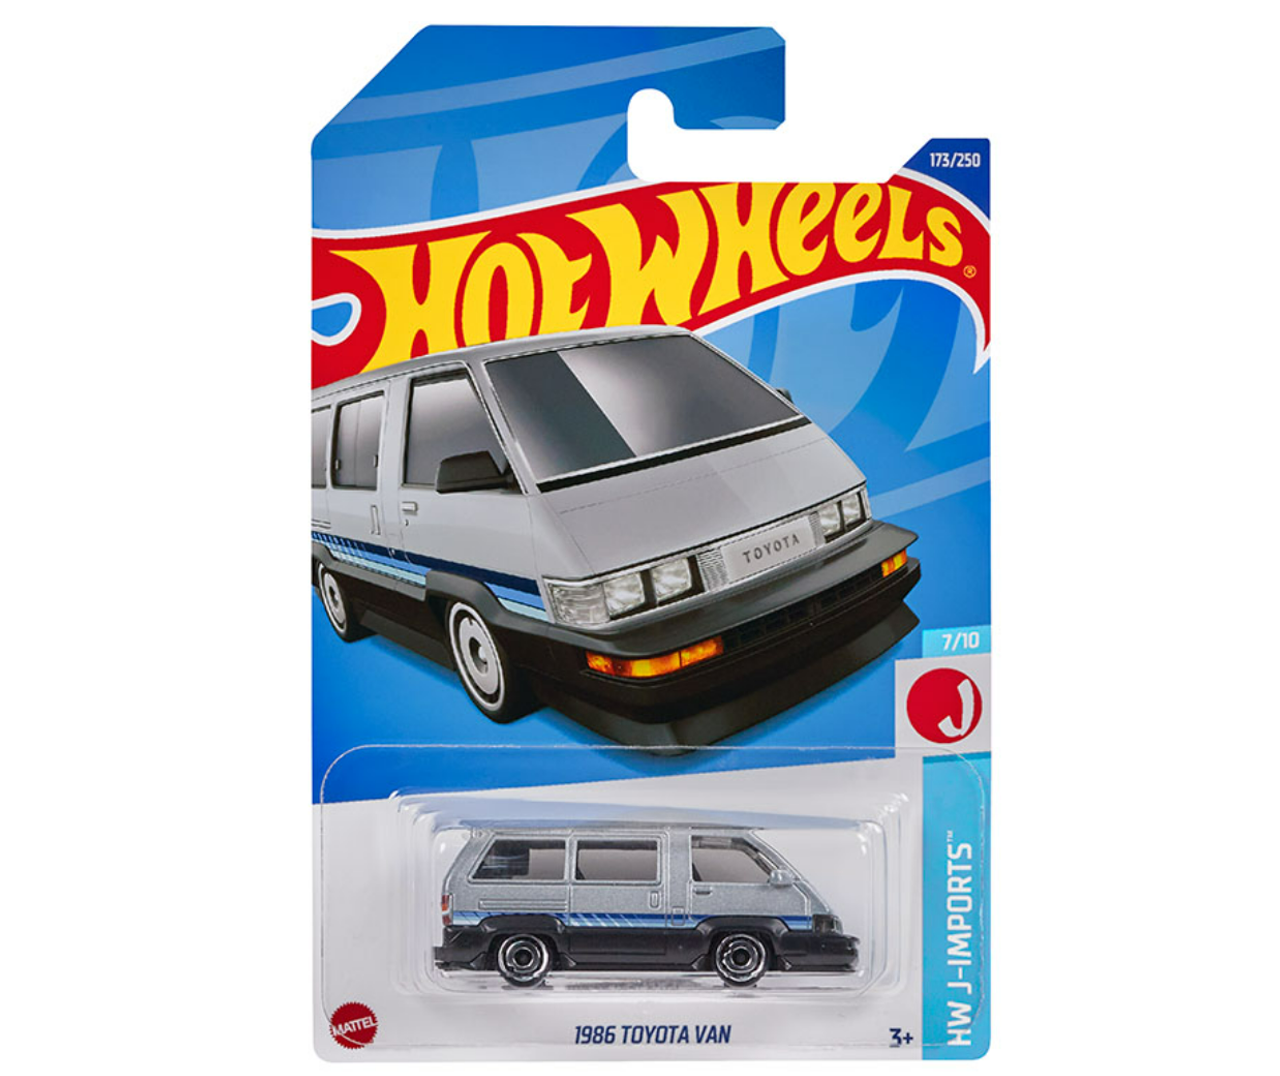 1/64 Hot Wheels 1986 Toyota Van Classic (Silver) Diecast Car Model